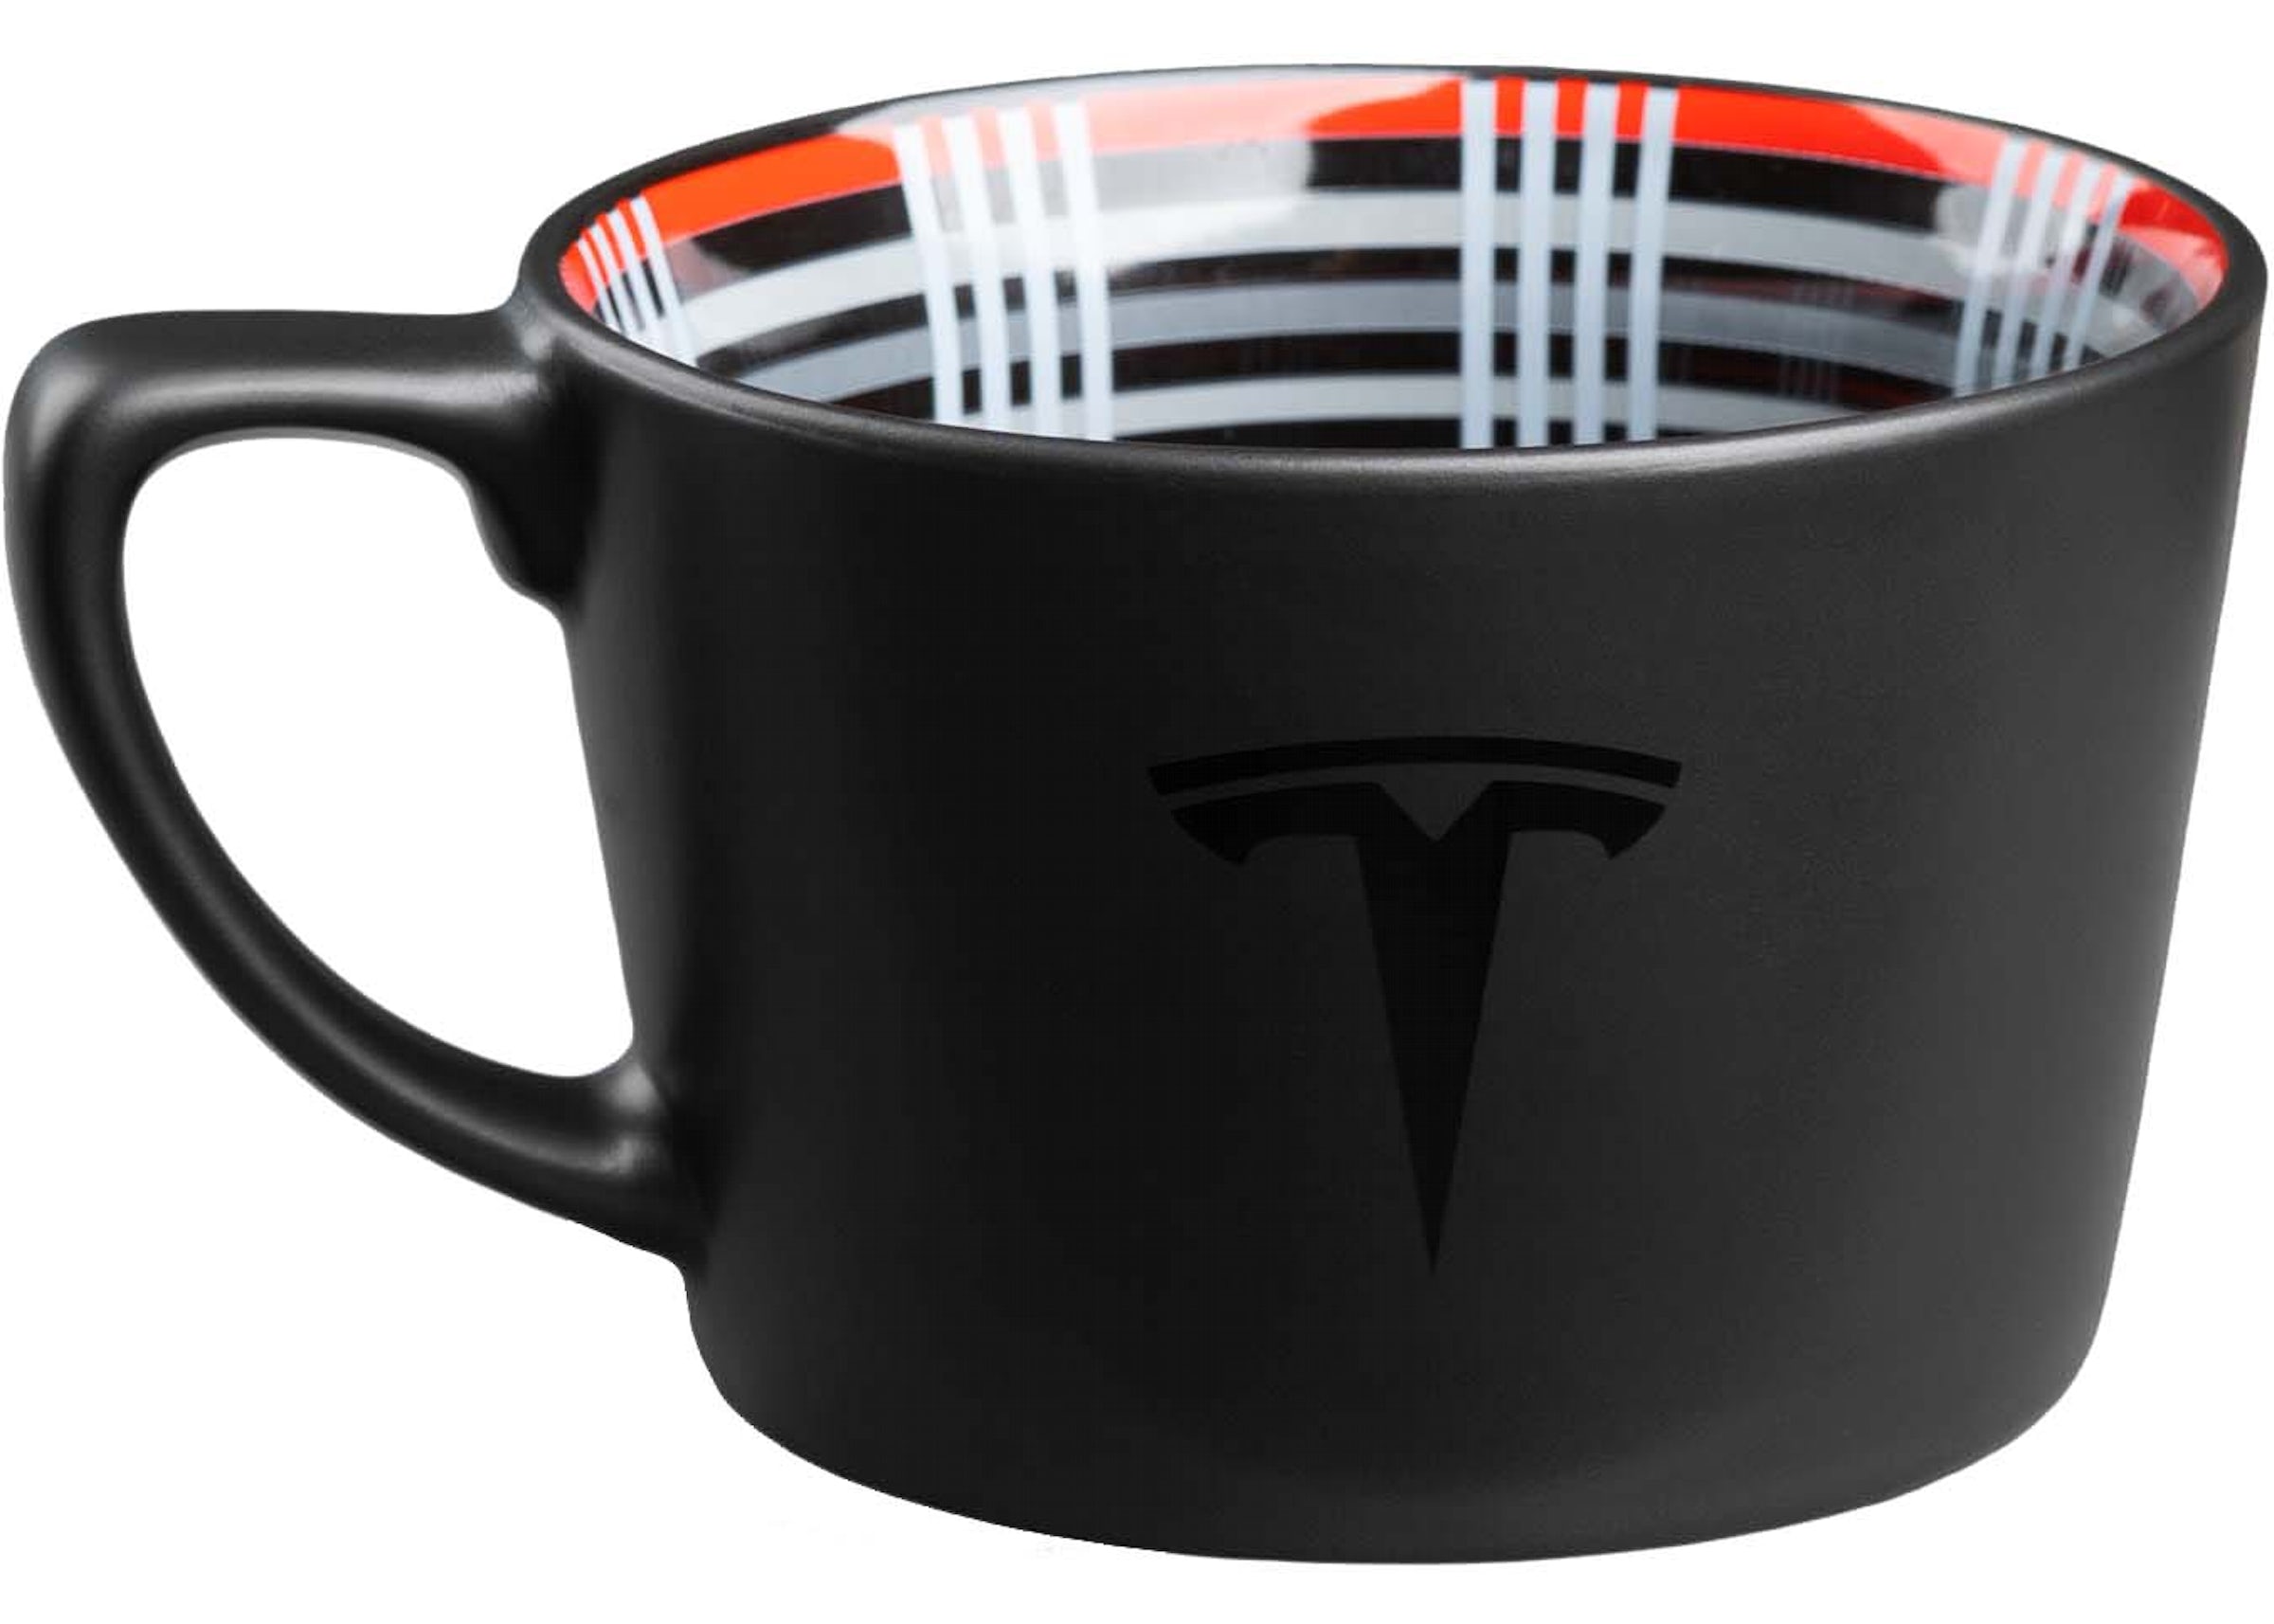 https://images.stockx.com/images/Tesla-Plaid-Mug.jpg?fit=fill&bg=FFFFFF&w=1200&h=857&fm=jpg&auto=compress&dpr=2&trim=color&updated_at=1669102196&q=60